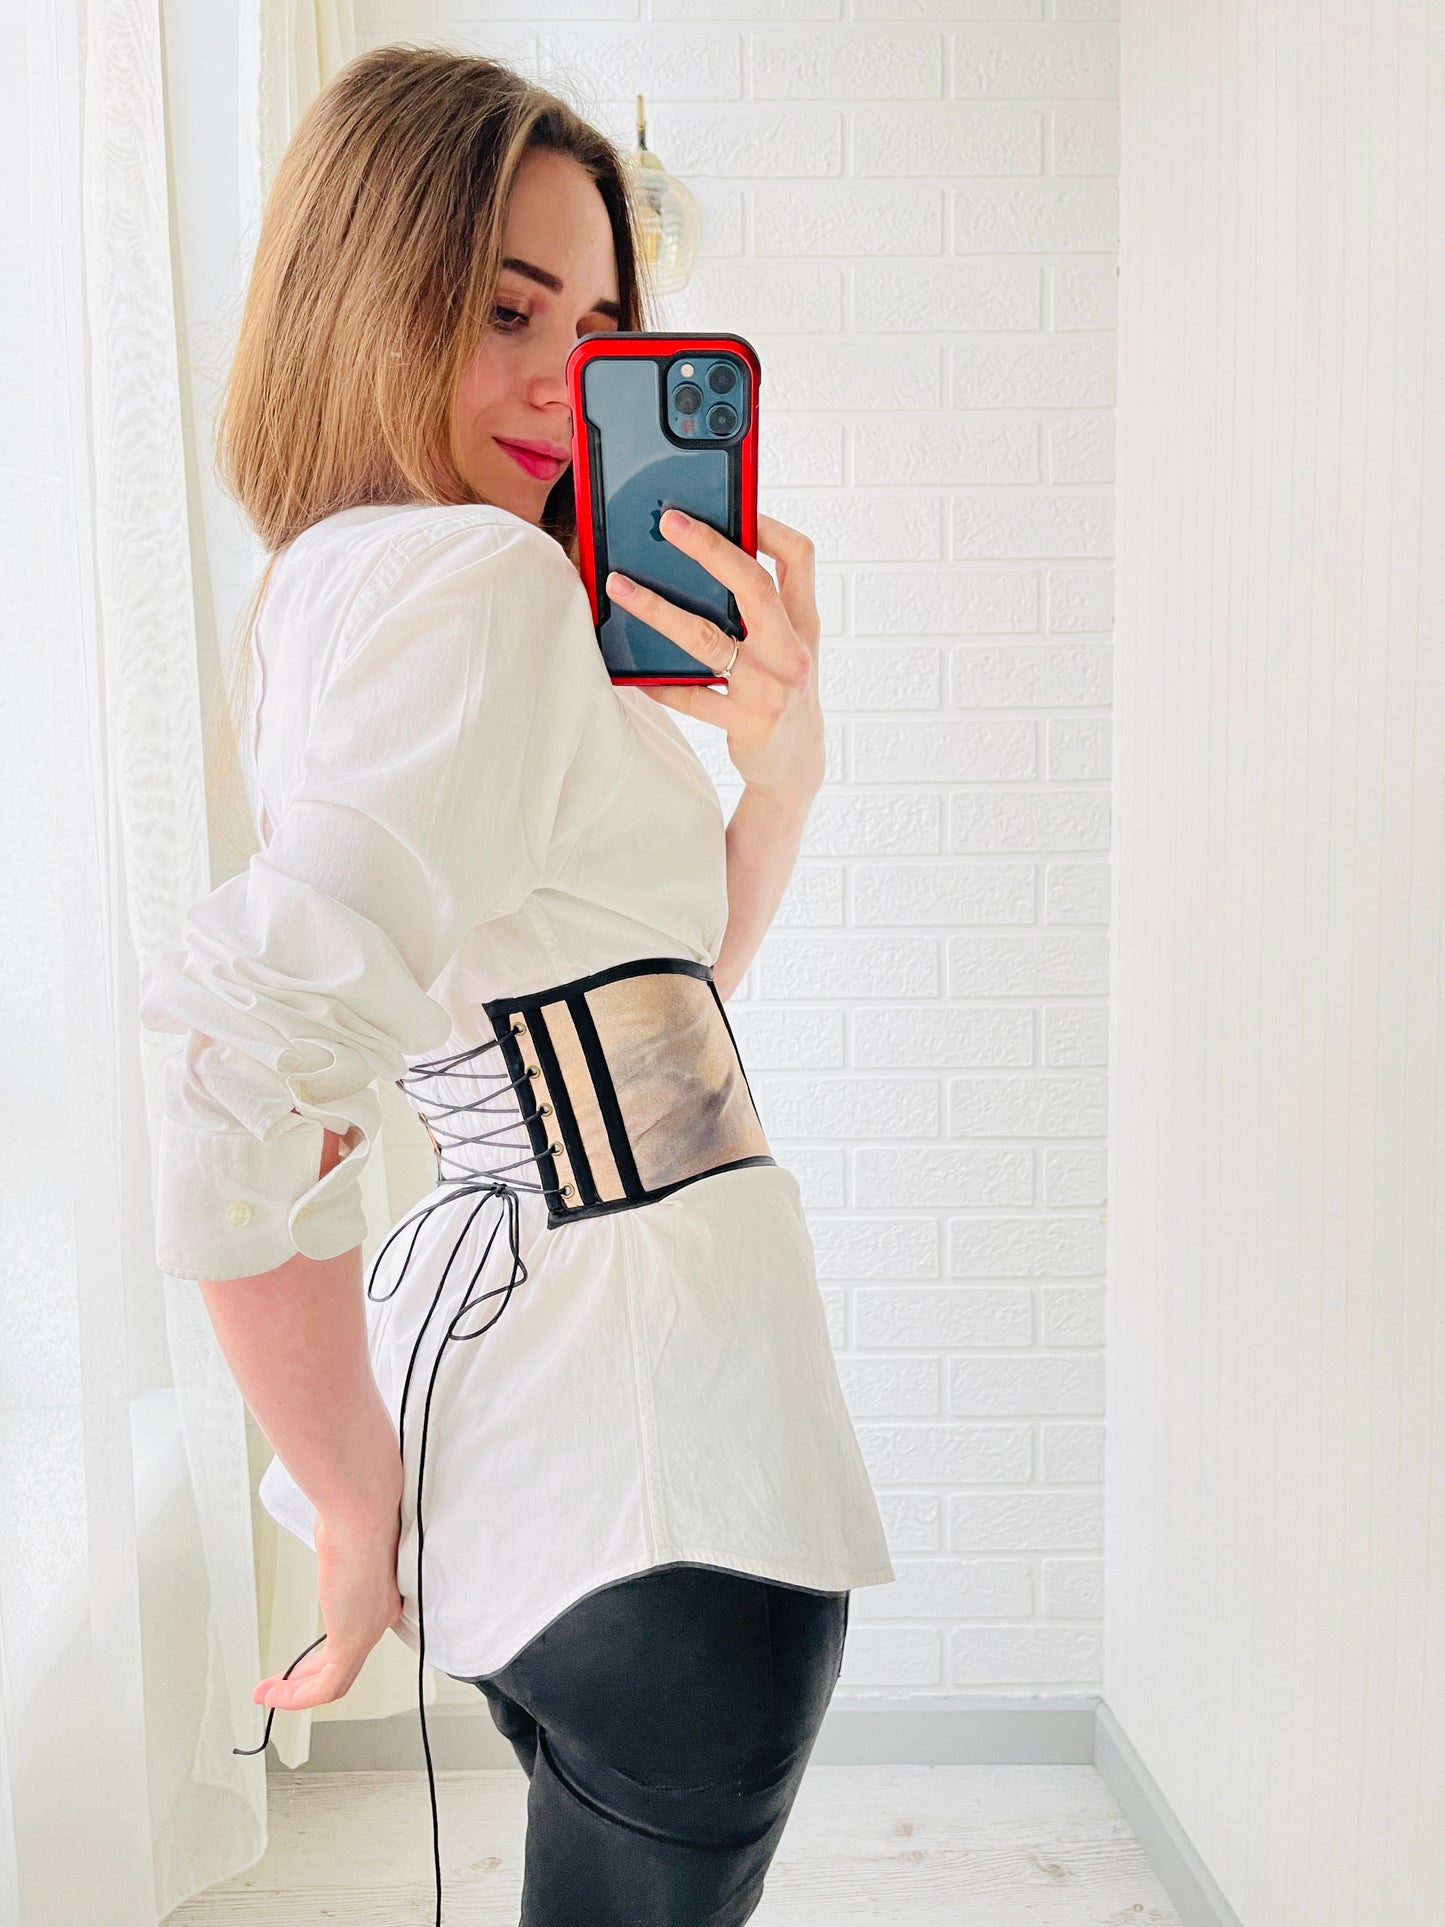 Sistine Madonna Inspired Corset Belt on Model - Side View